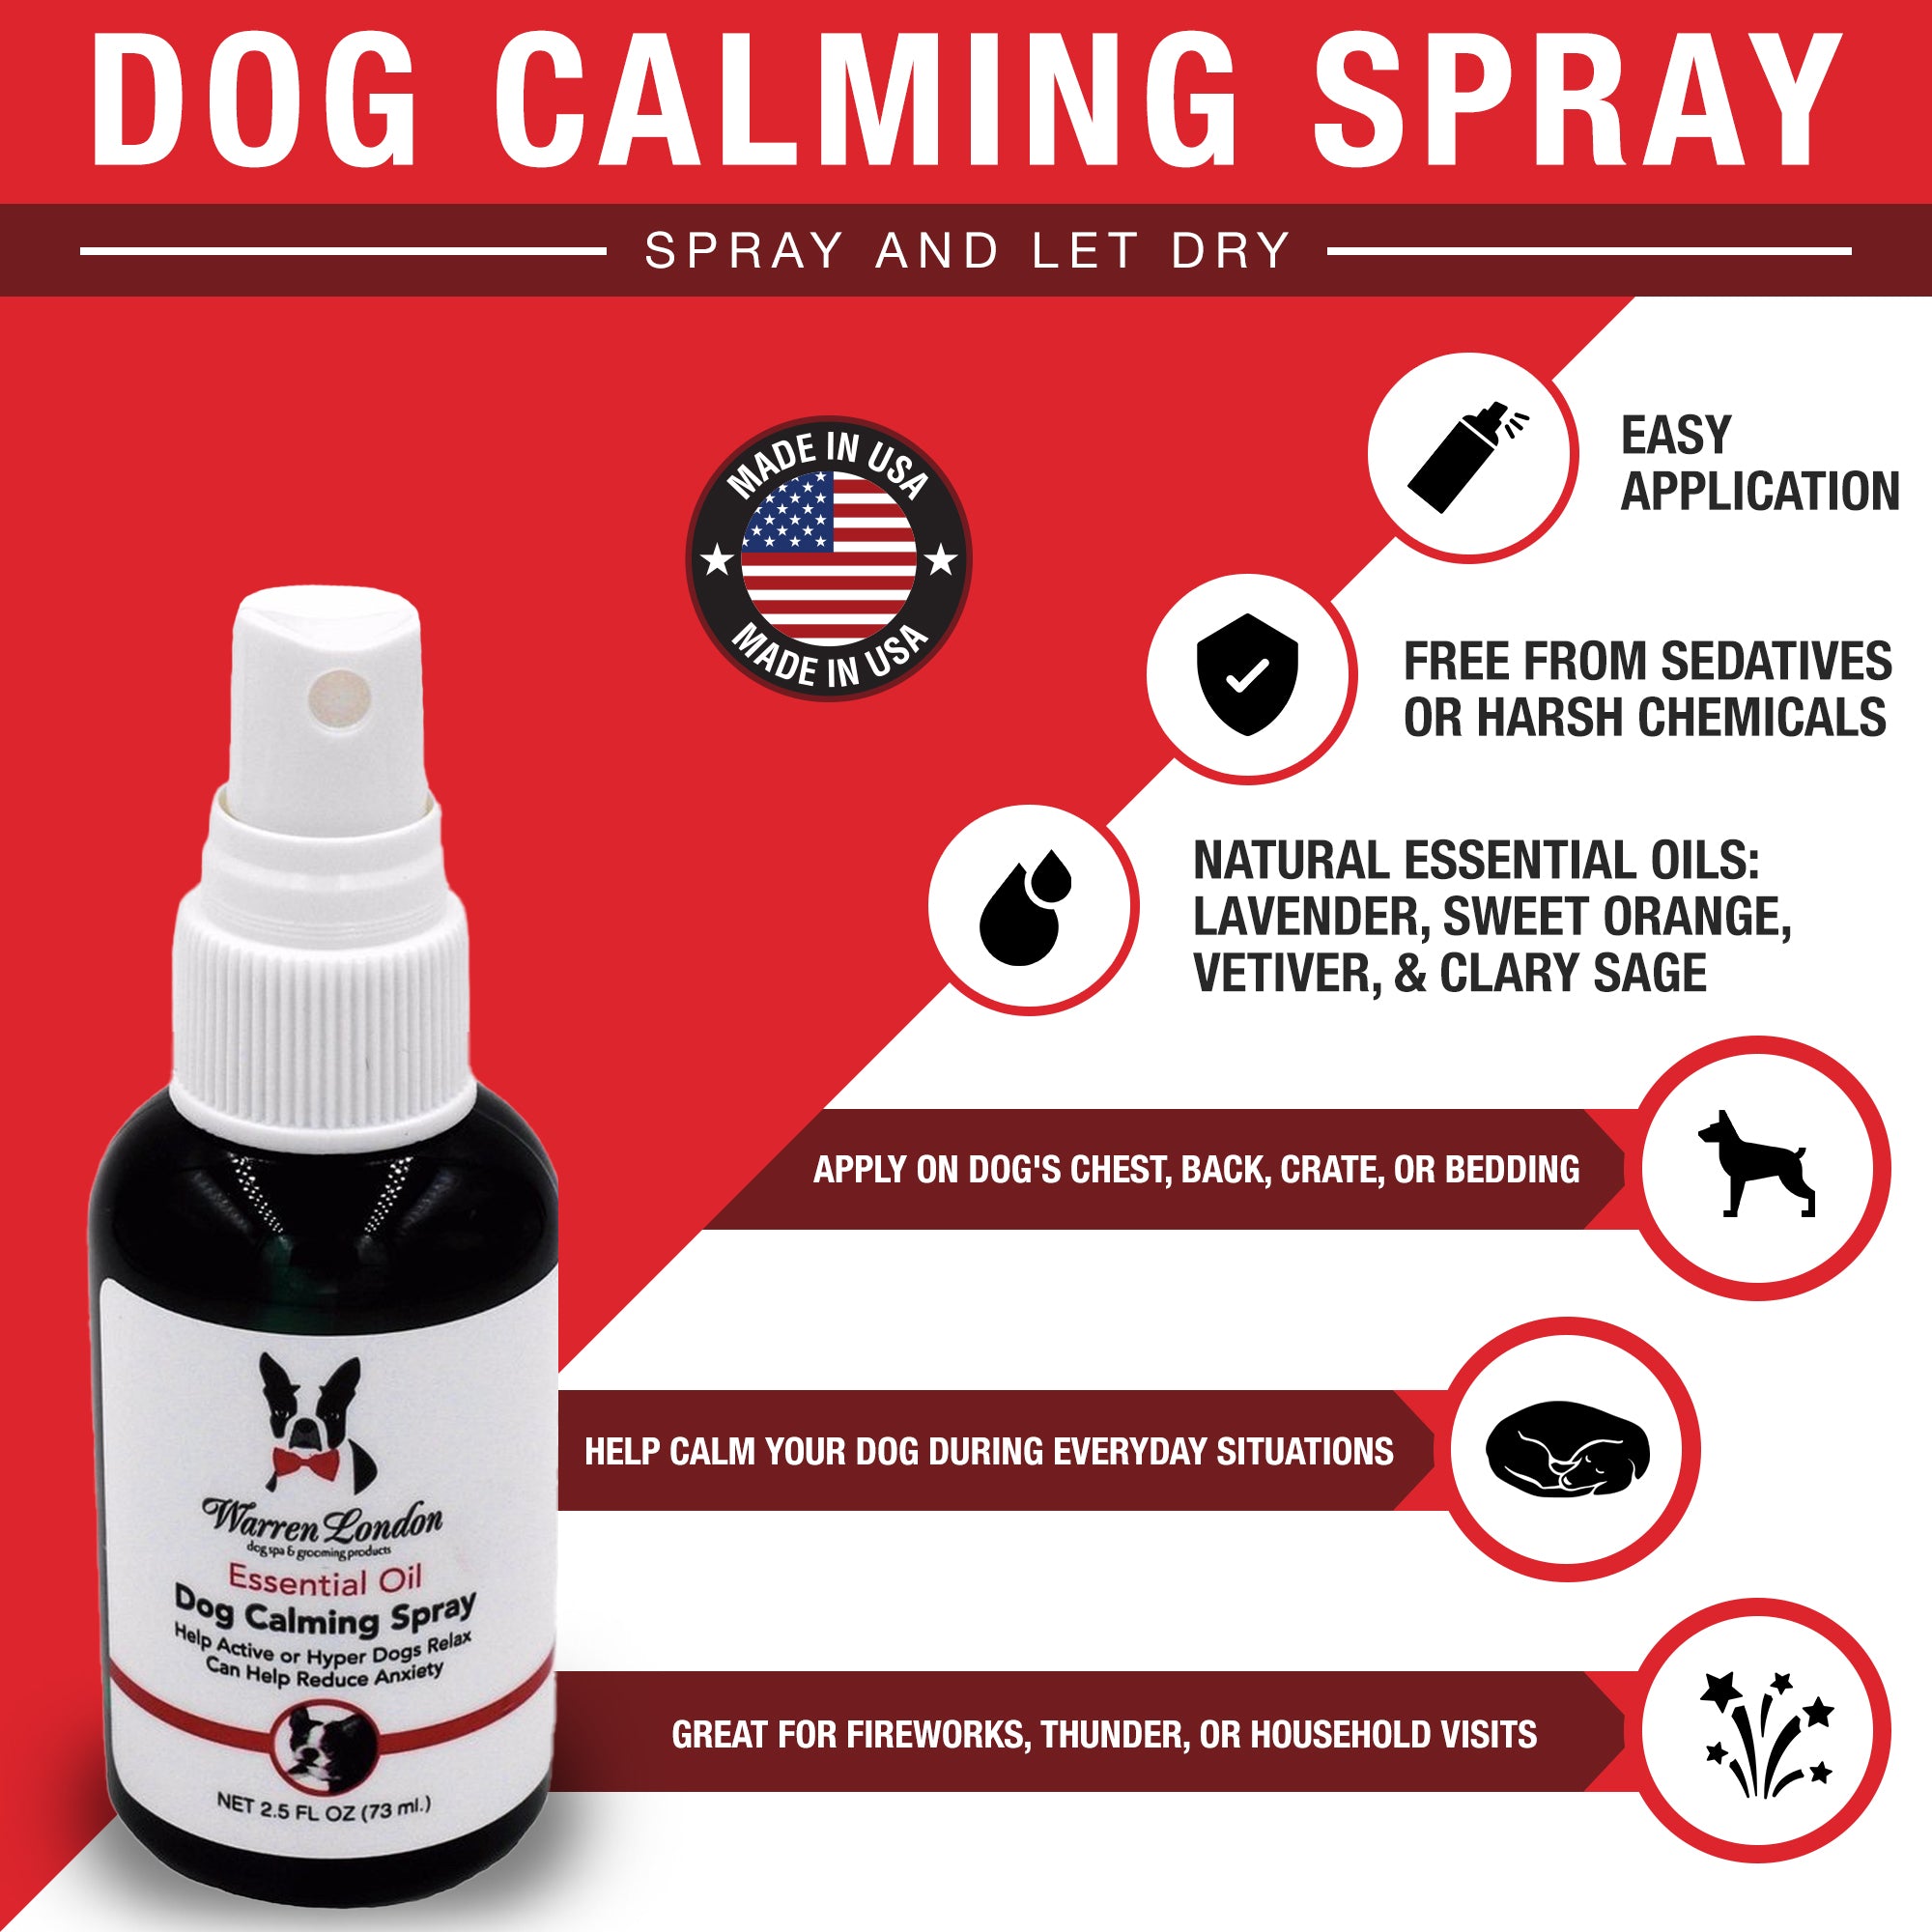 Essential Oil Dog Calming Spray Spa Product Warren London 